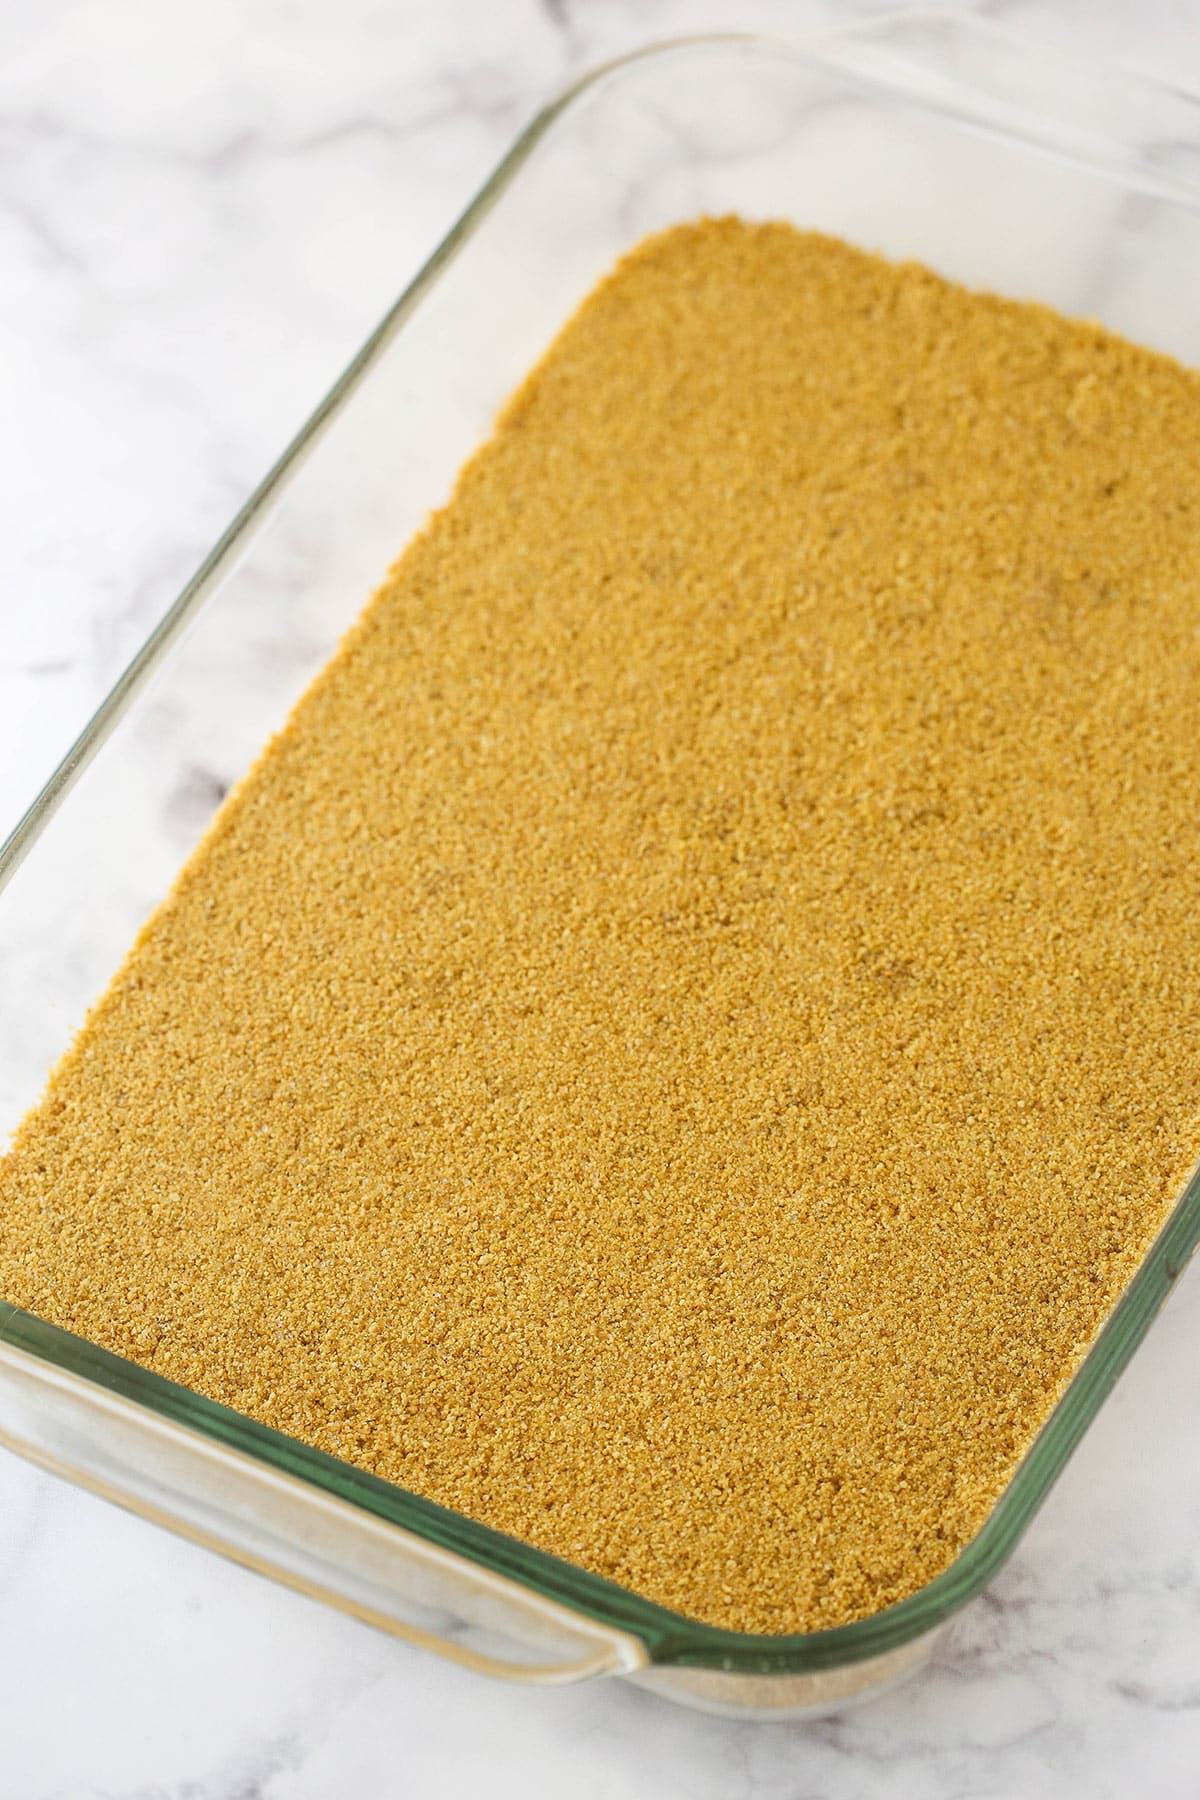 Graham Cracker crust in a 9x13-inch baking pan.